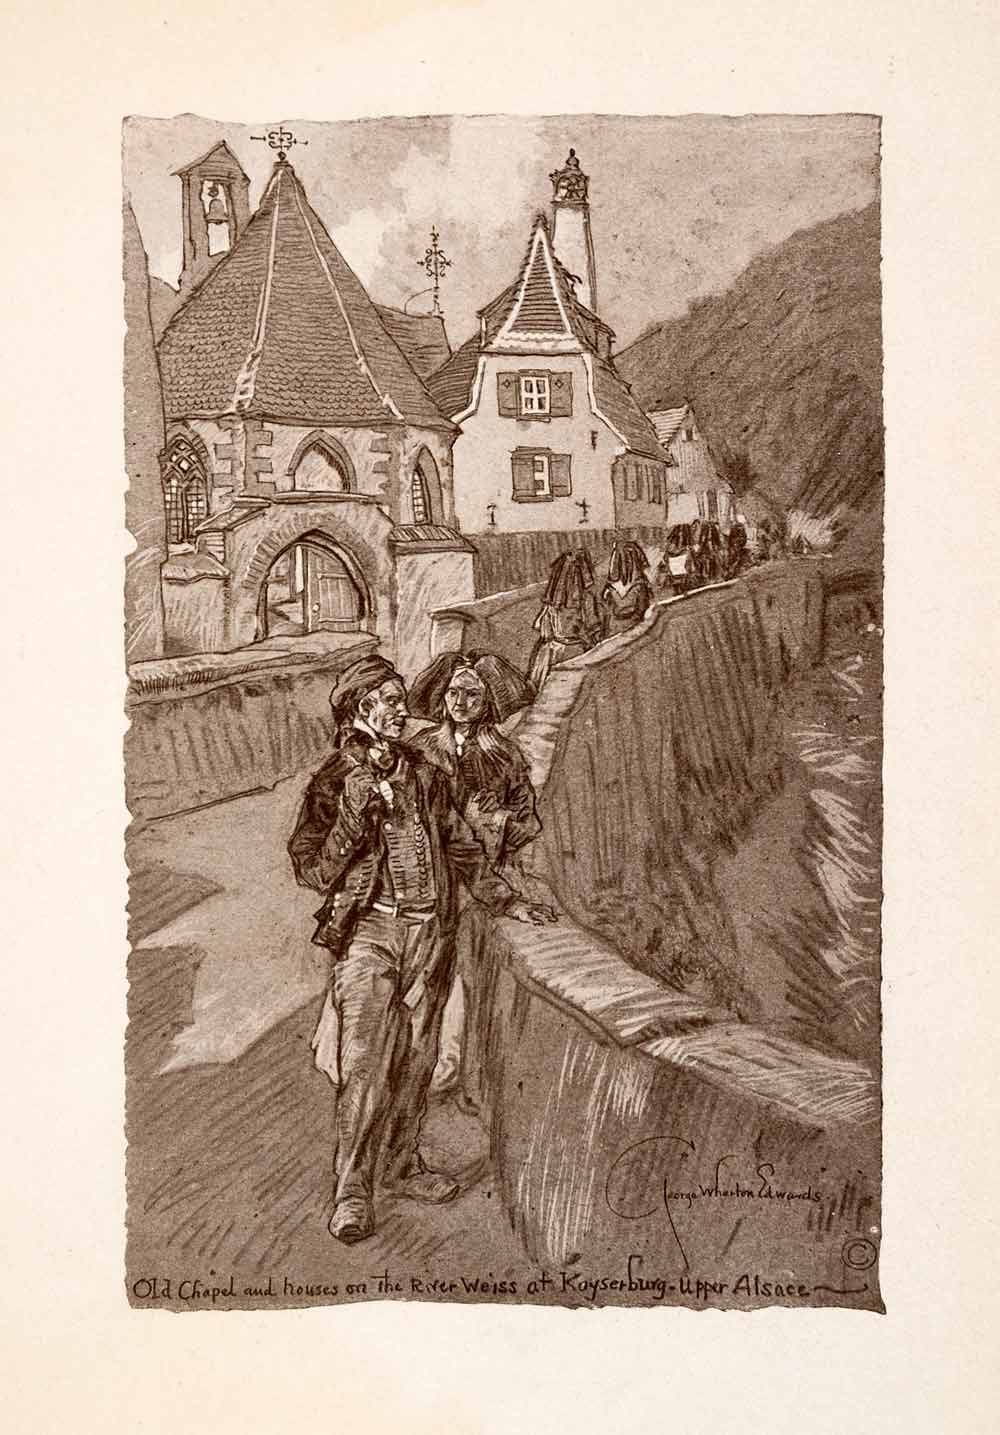 1918 Print George Wharton Edwards Kayserberg Chapel Weiss River Alsace XGDA8